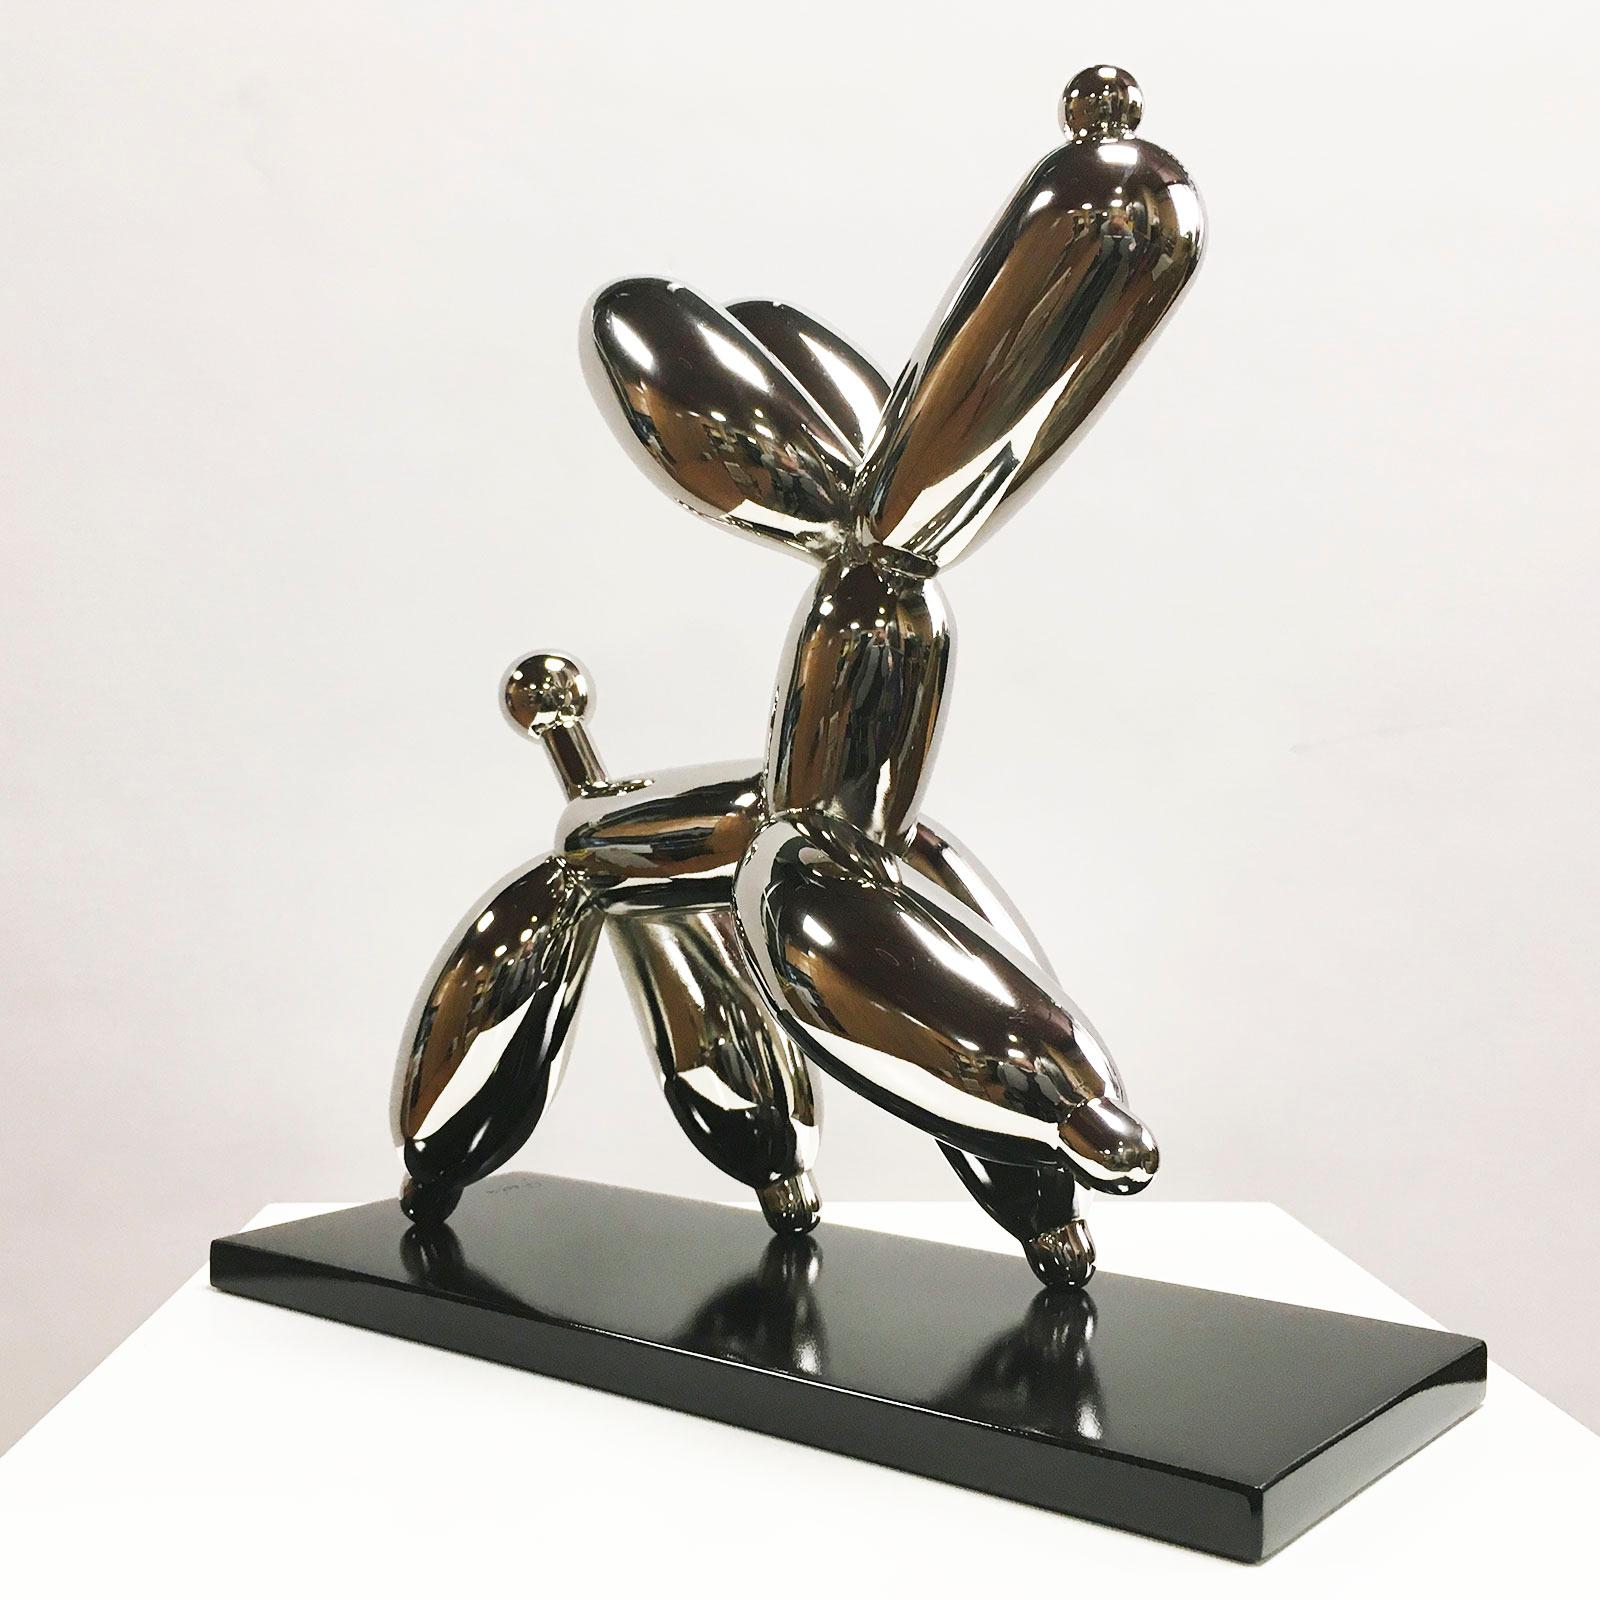 Smug dog - Miguel Guía, Pop Art Nickel layer Sculpture (choose finish color) 13